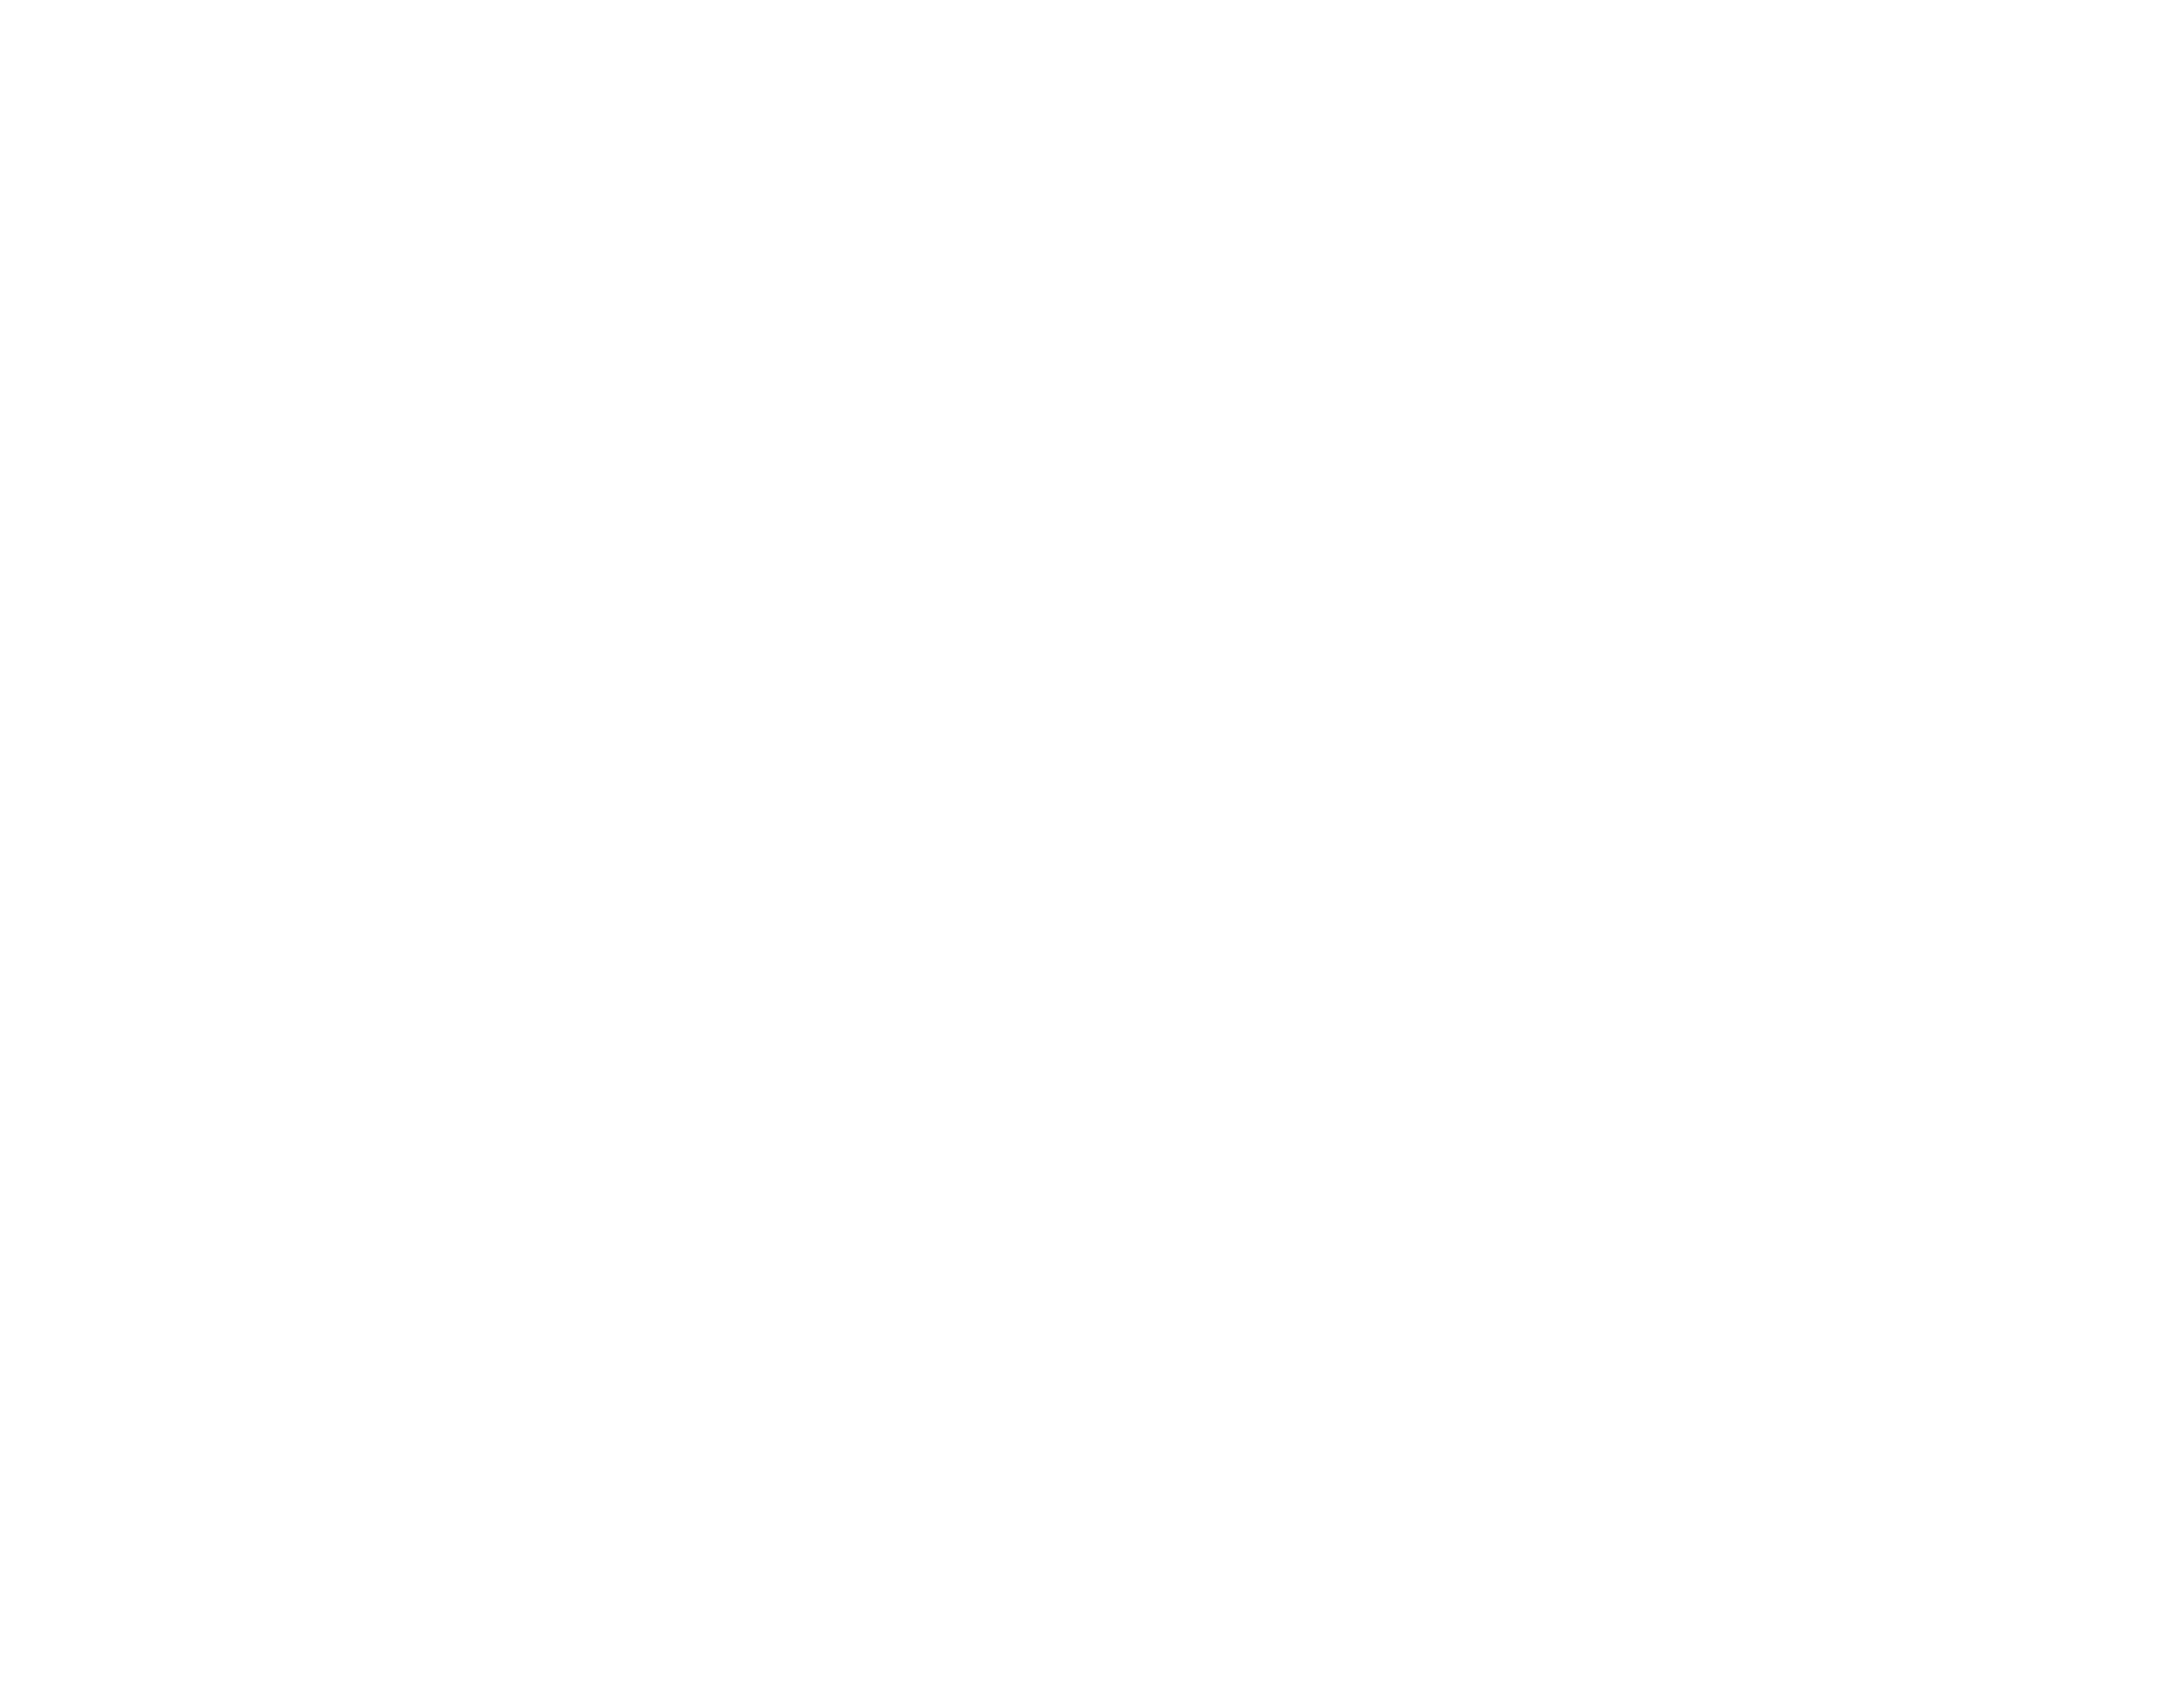 MasterPulpo Logo